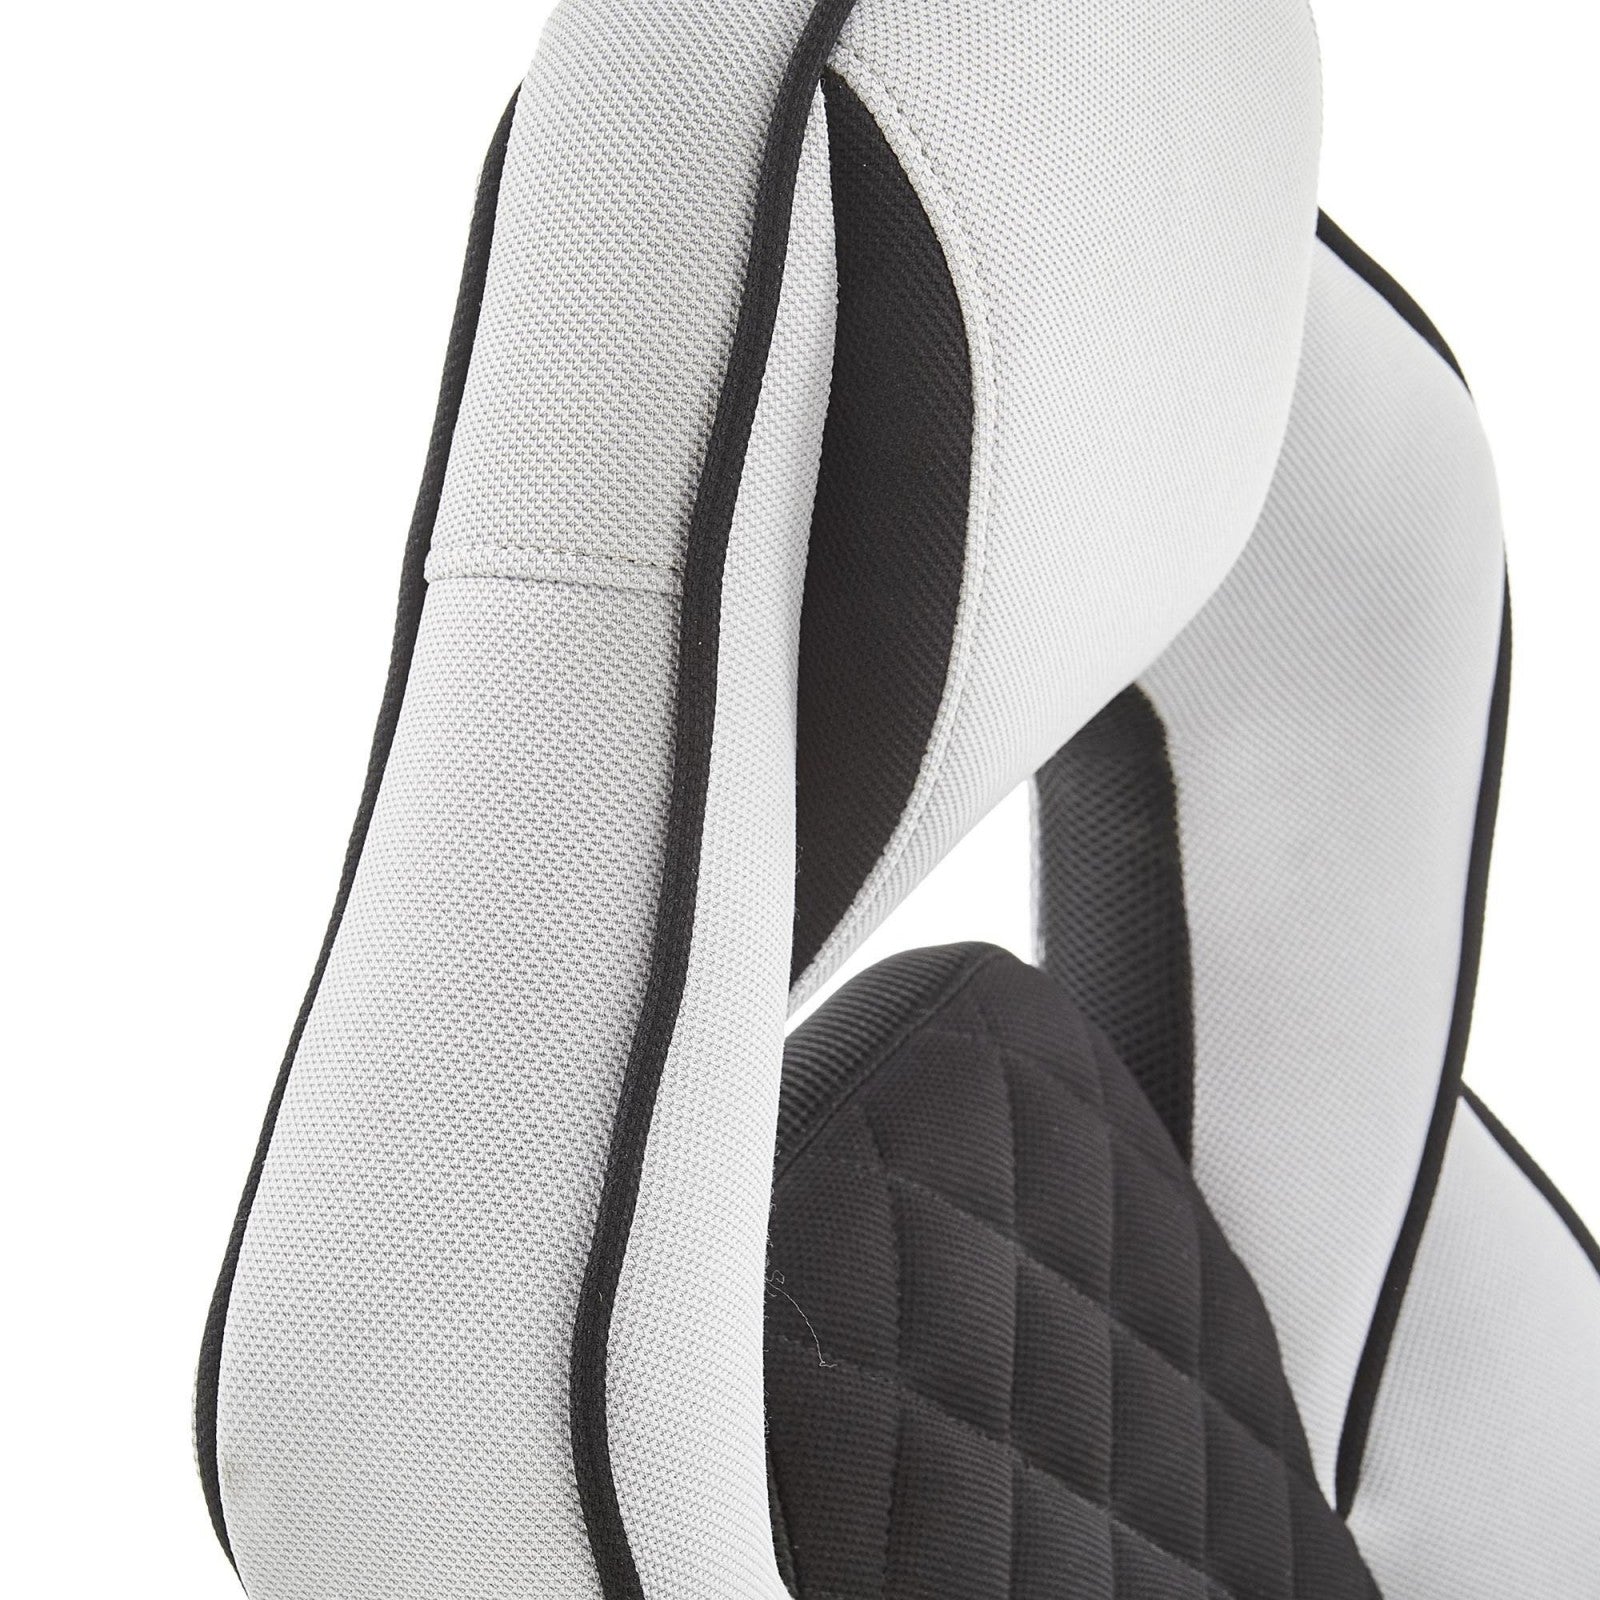 Scaun de birou ergonomic APOLLO, Model ergonomic, cadru metalic cromat, Utilizare 8 ore, tesatura Black Mesh